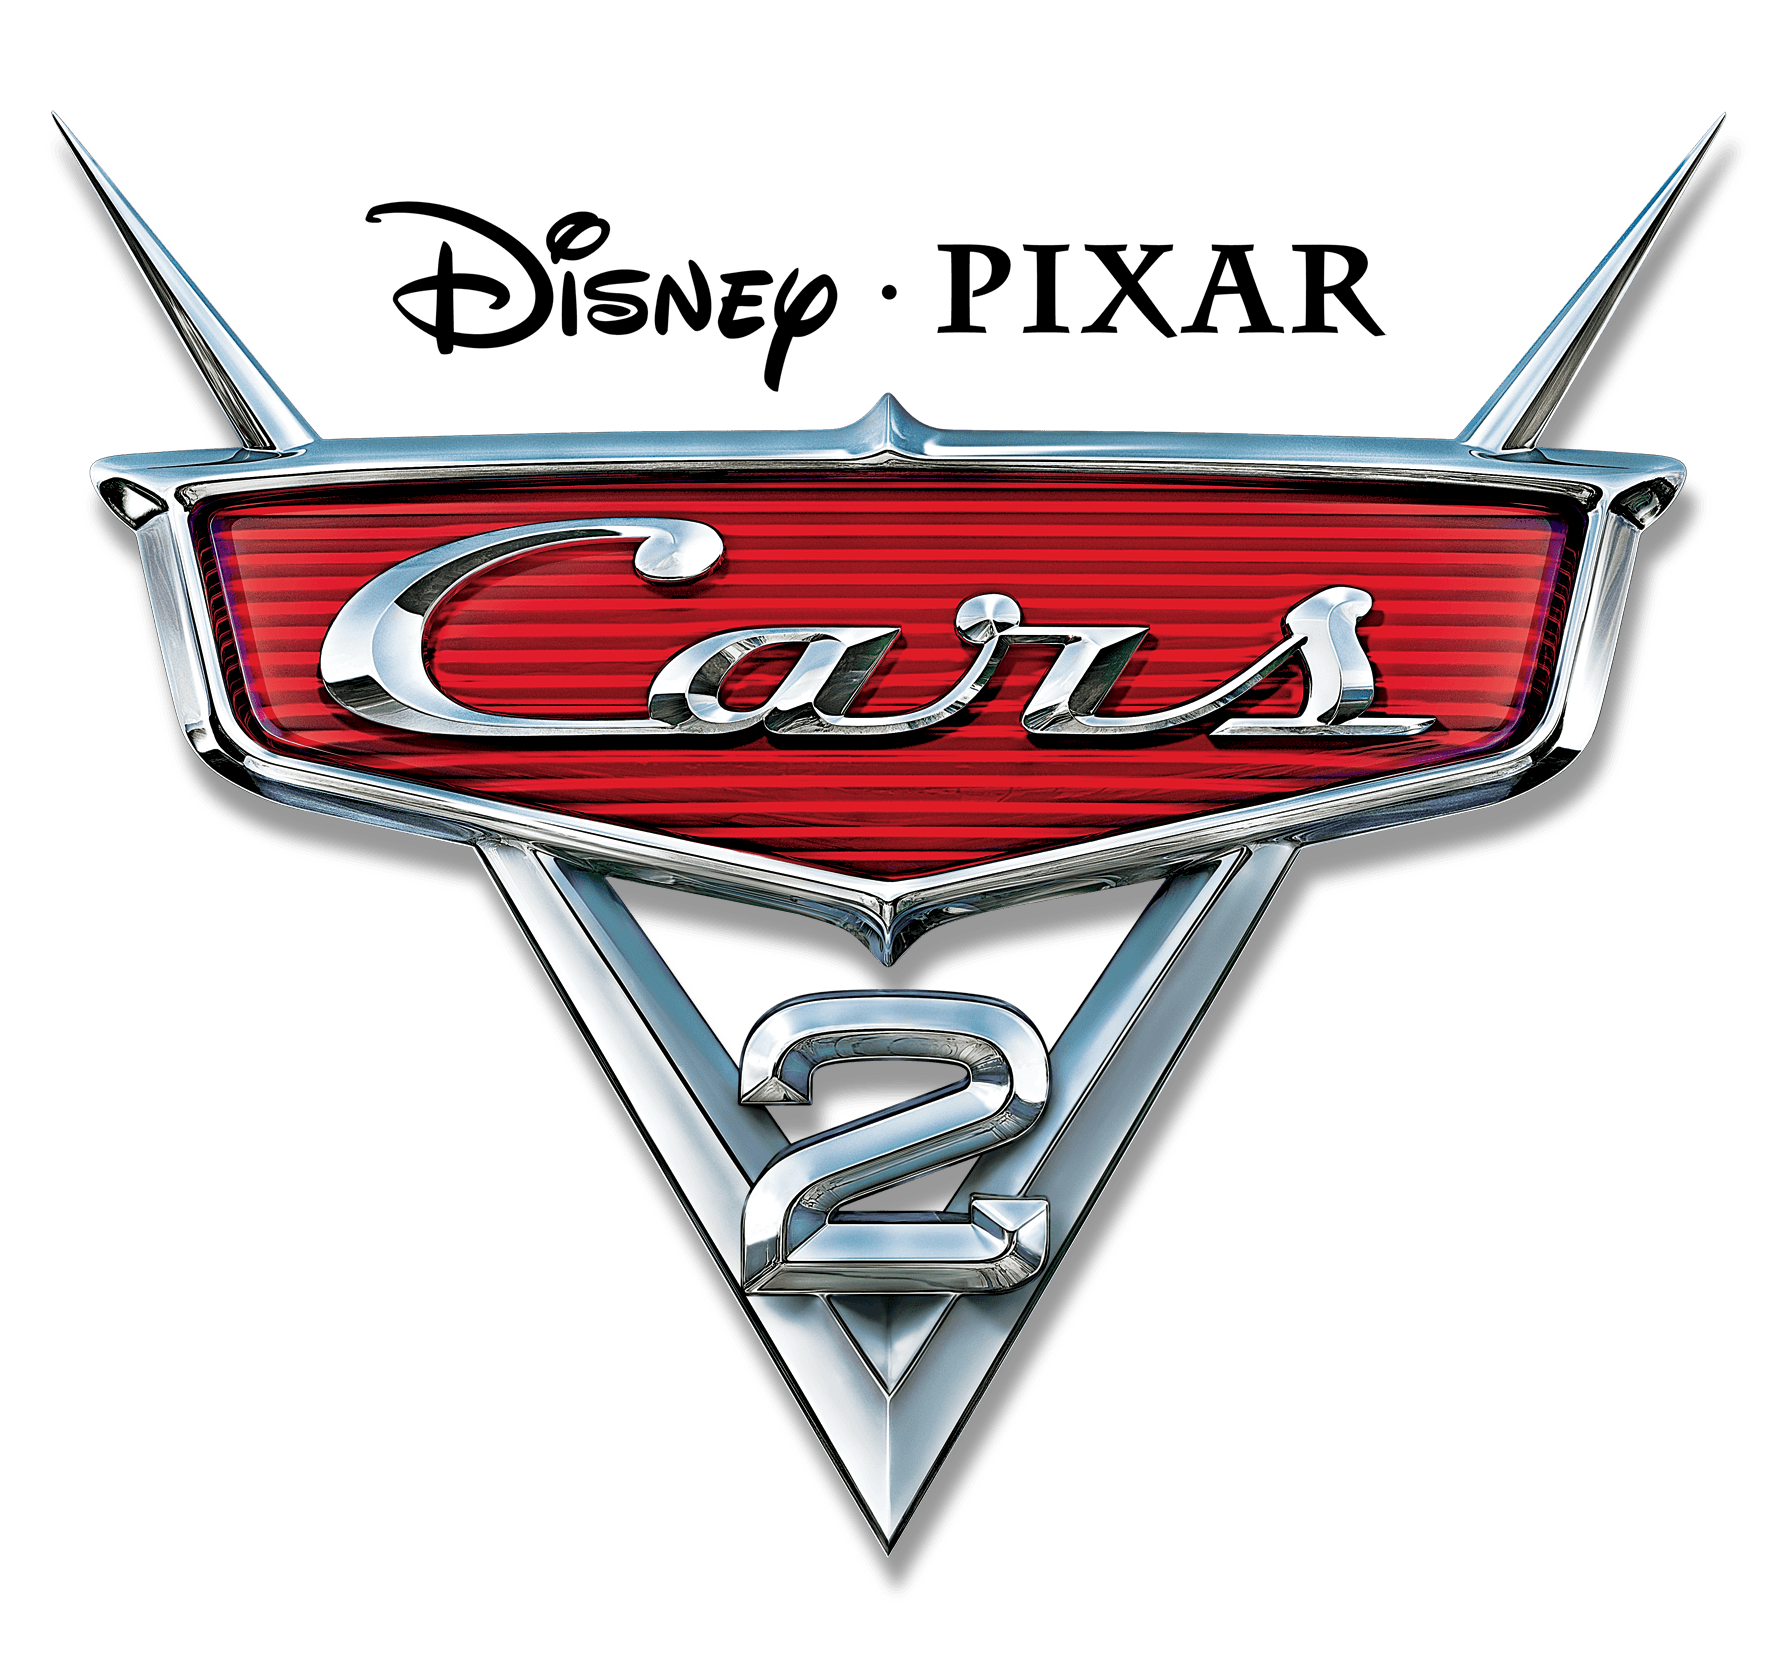 2 Disney Pixar Logo - Pixar Cars 2 Logo Png Images